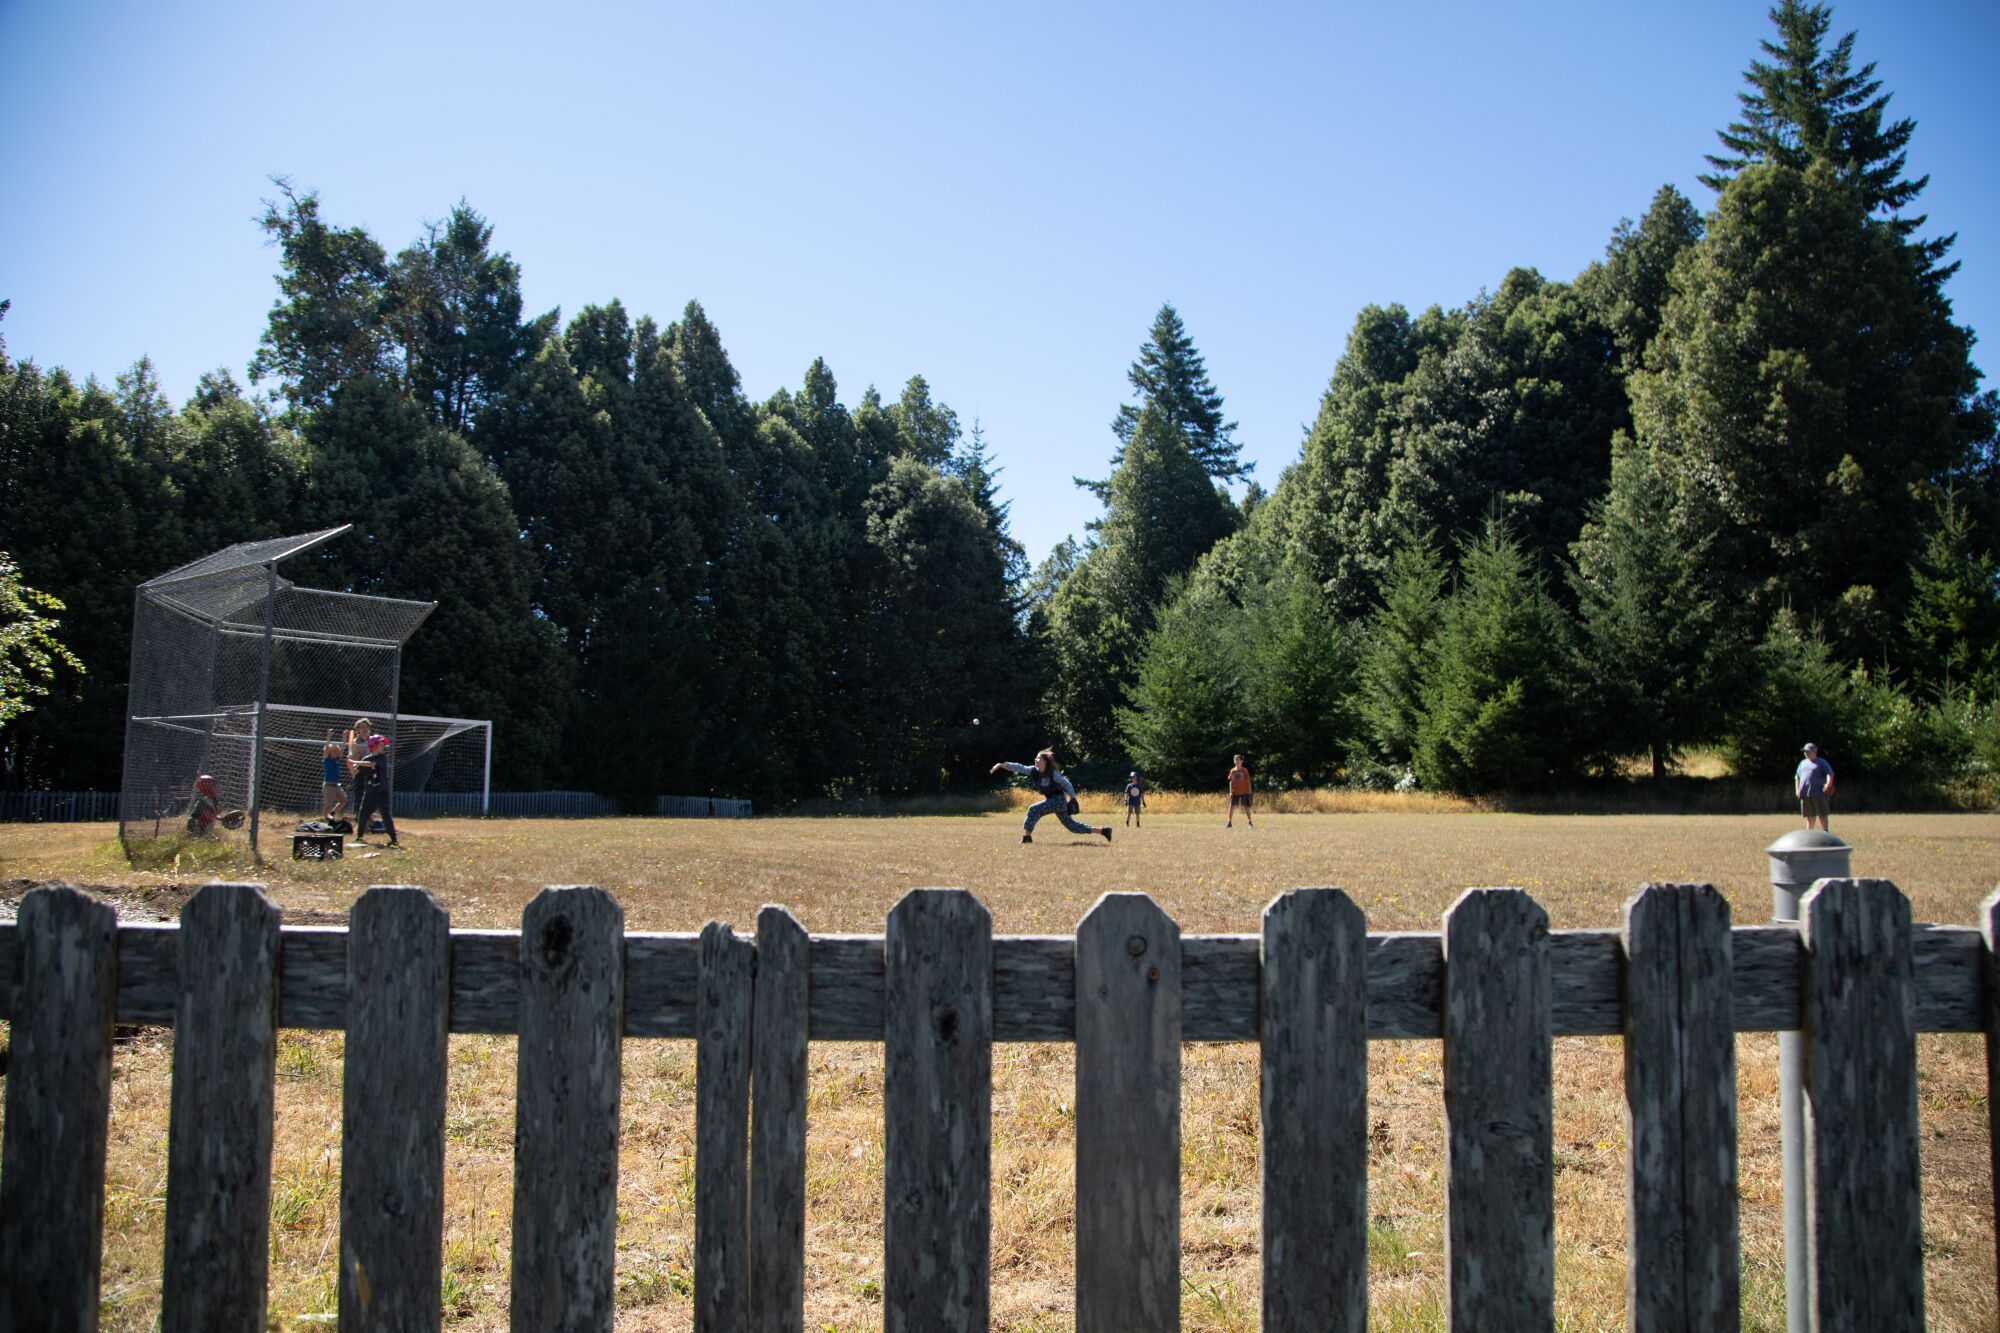 Students play baseball during a school break.